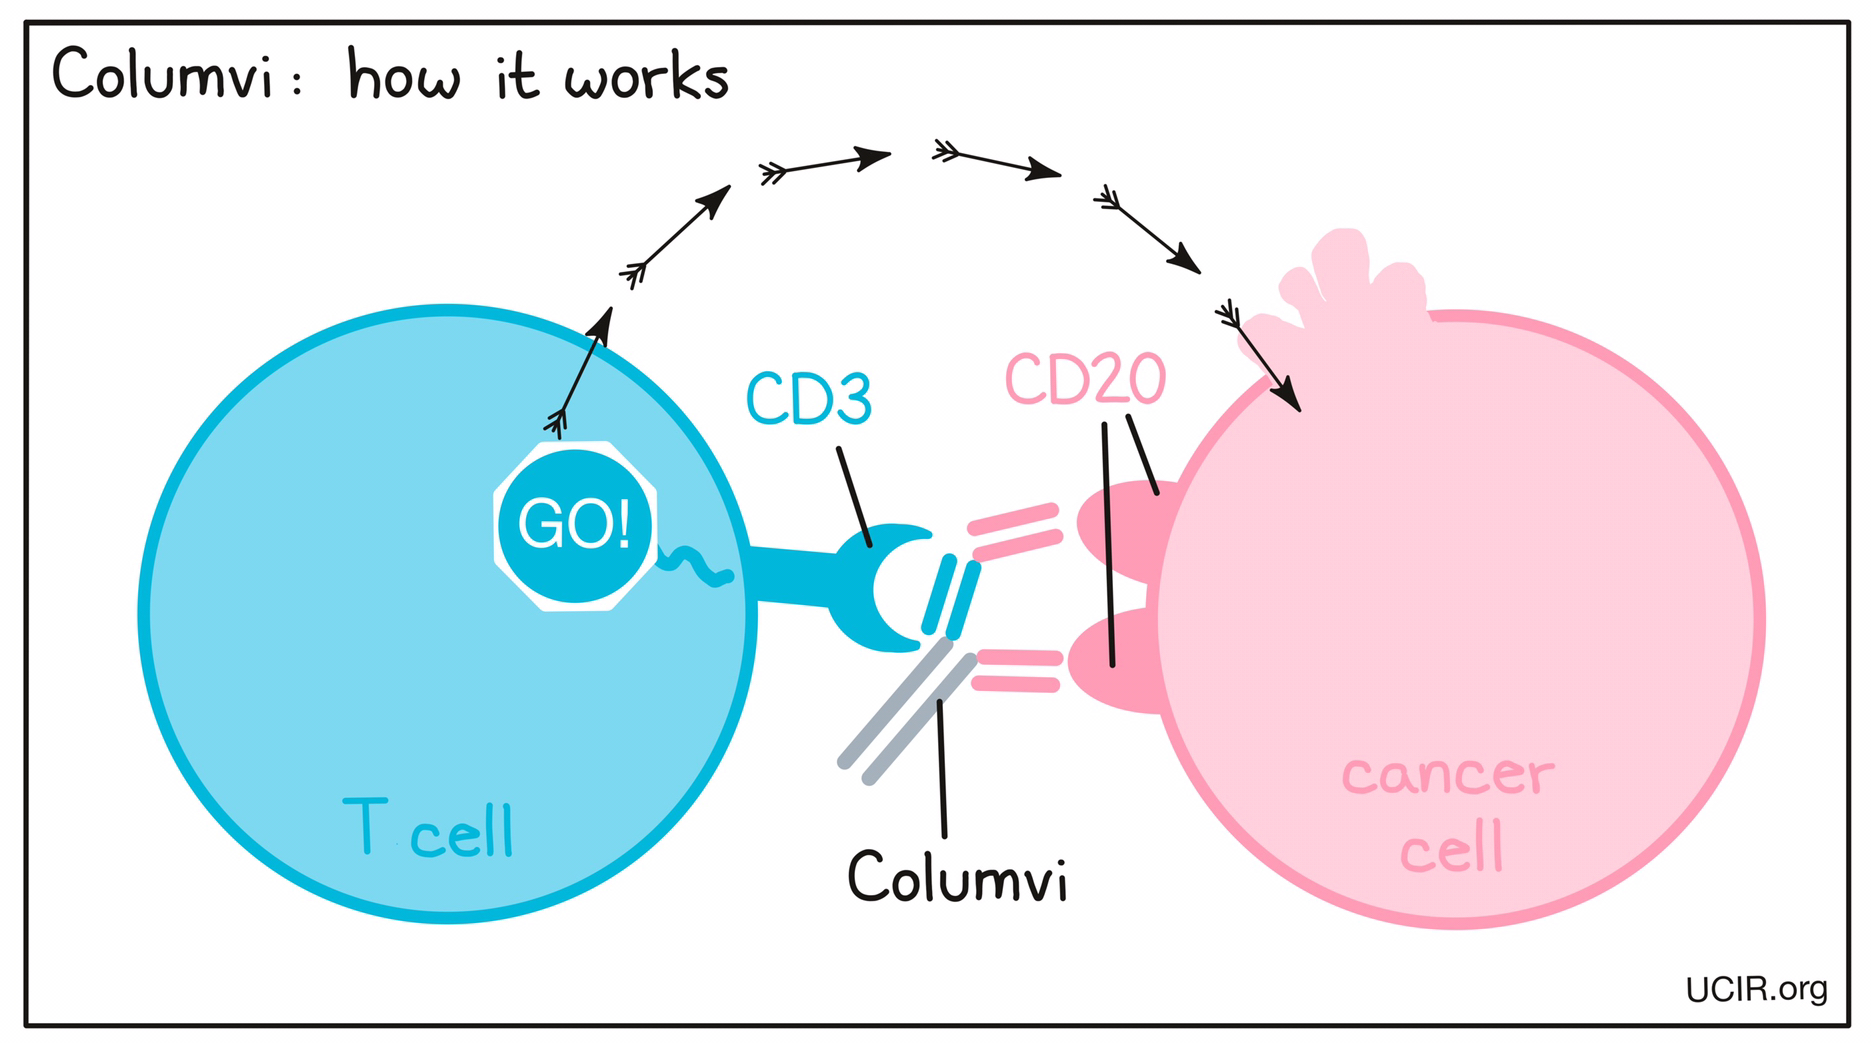 Illustration showing how Columvi works